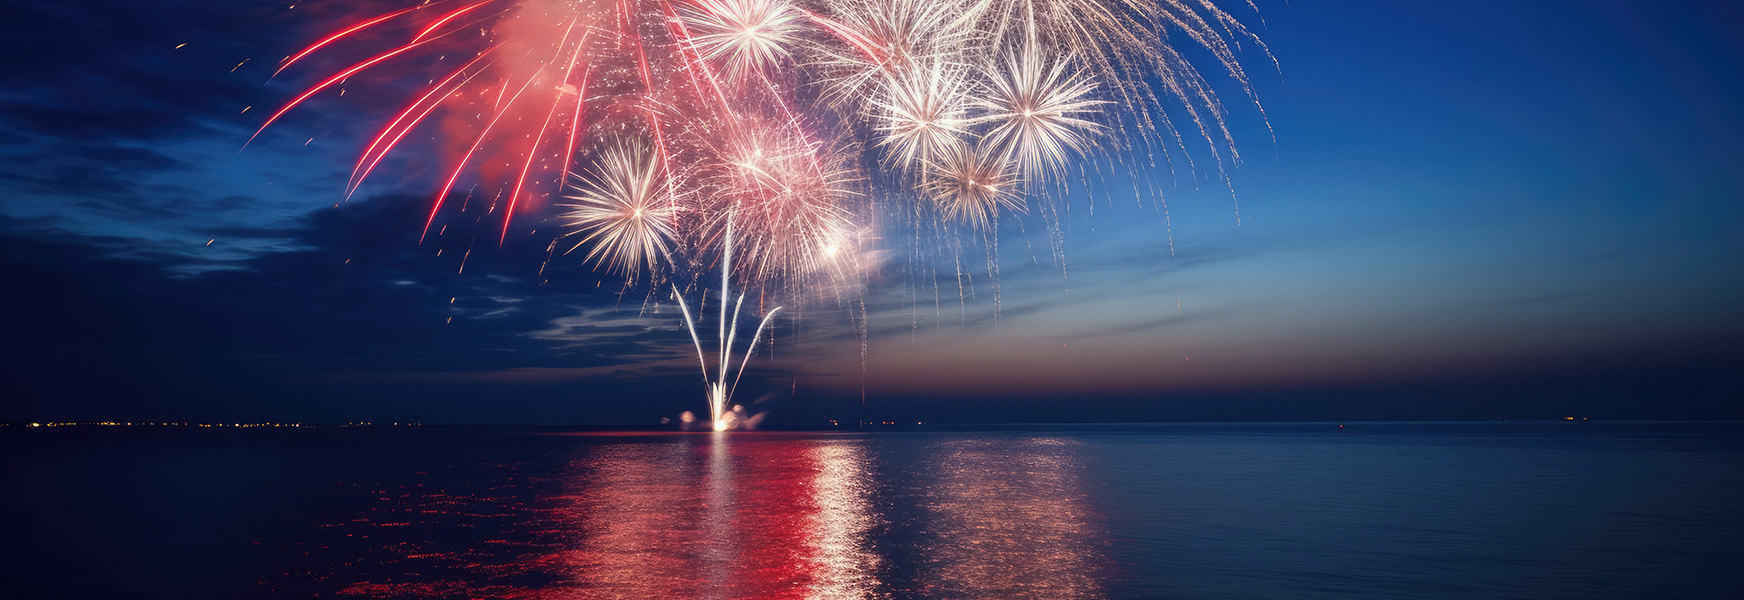 July 4 Fireworks Celebration over calm lake